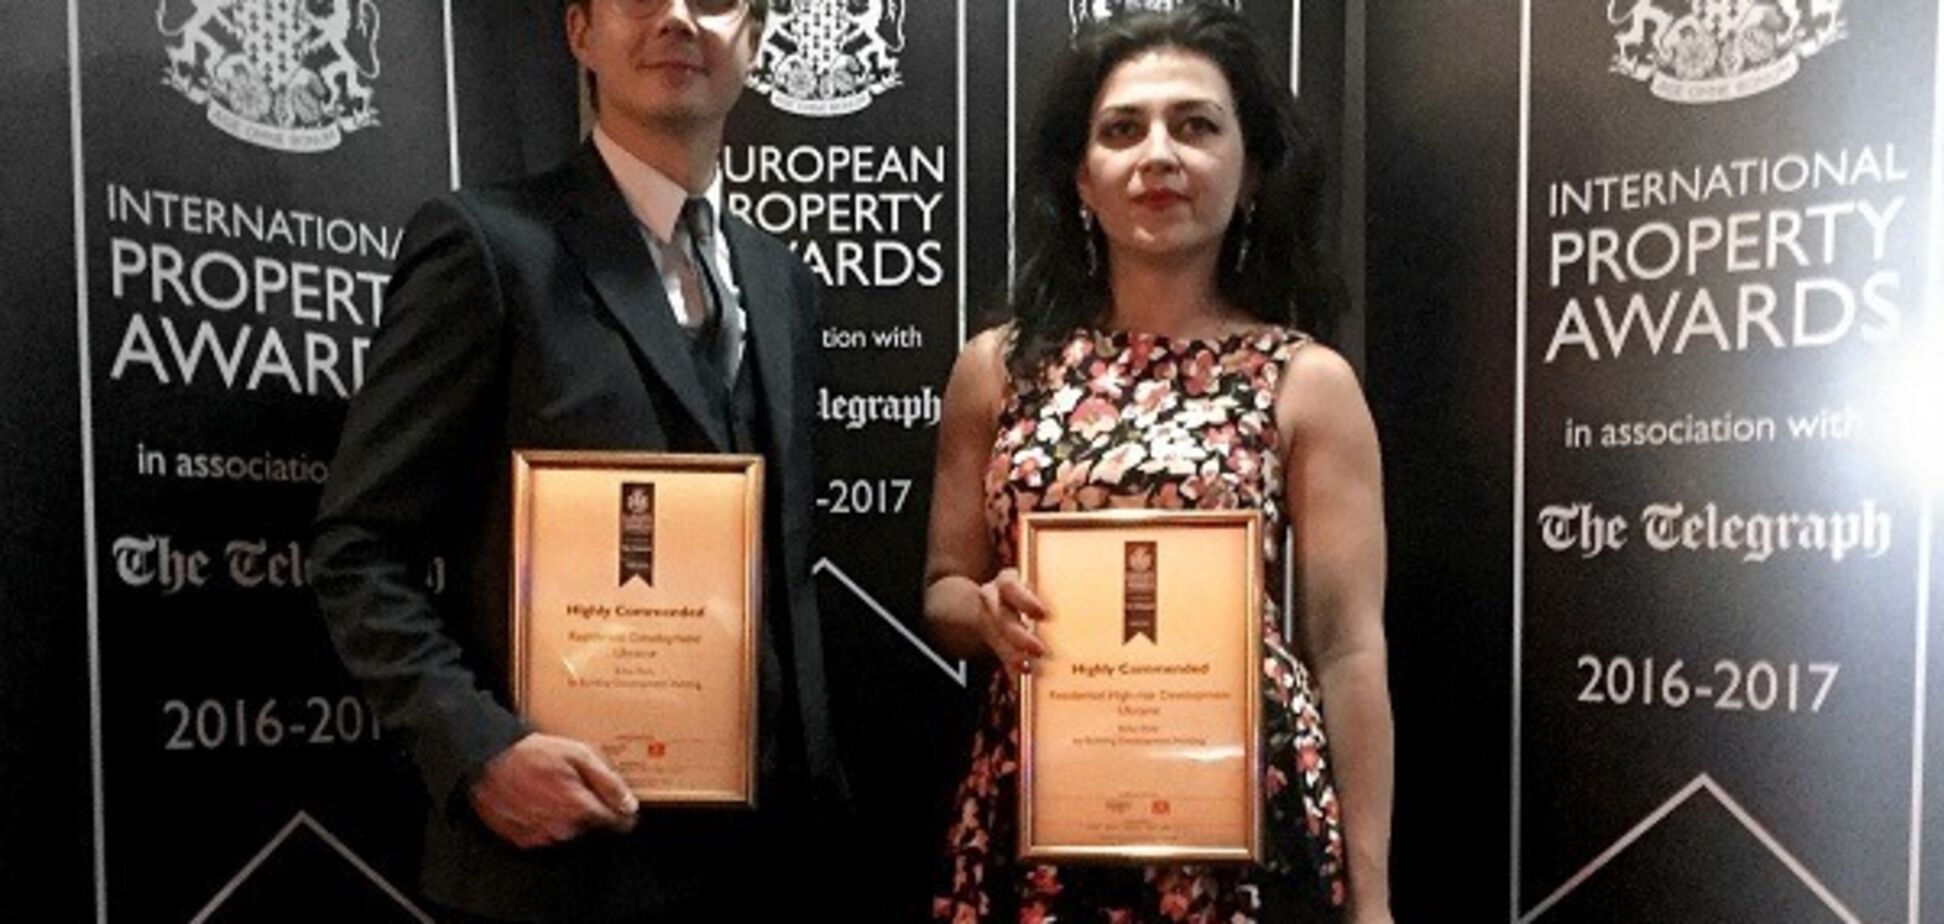 The European Property Awards